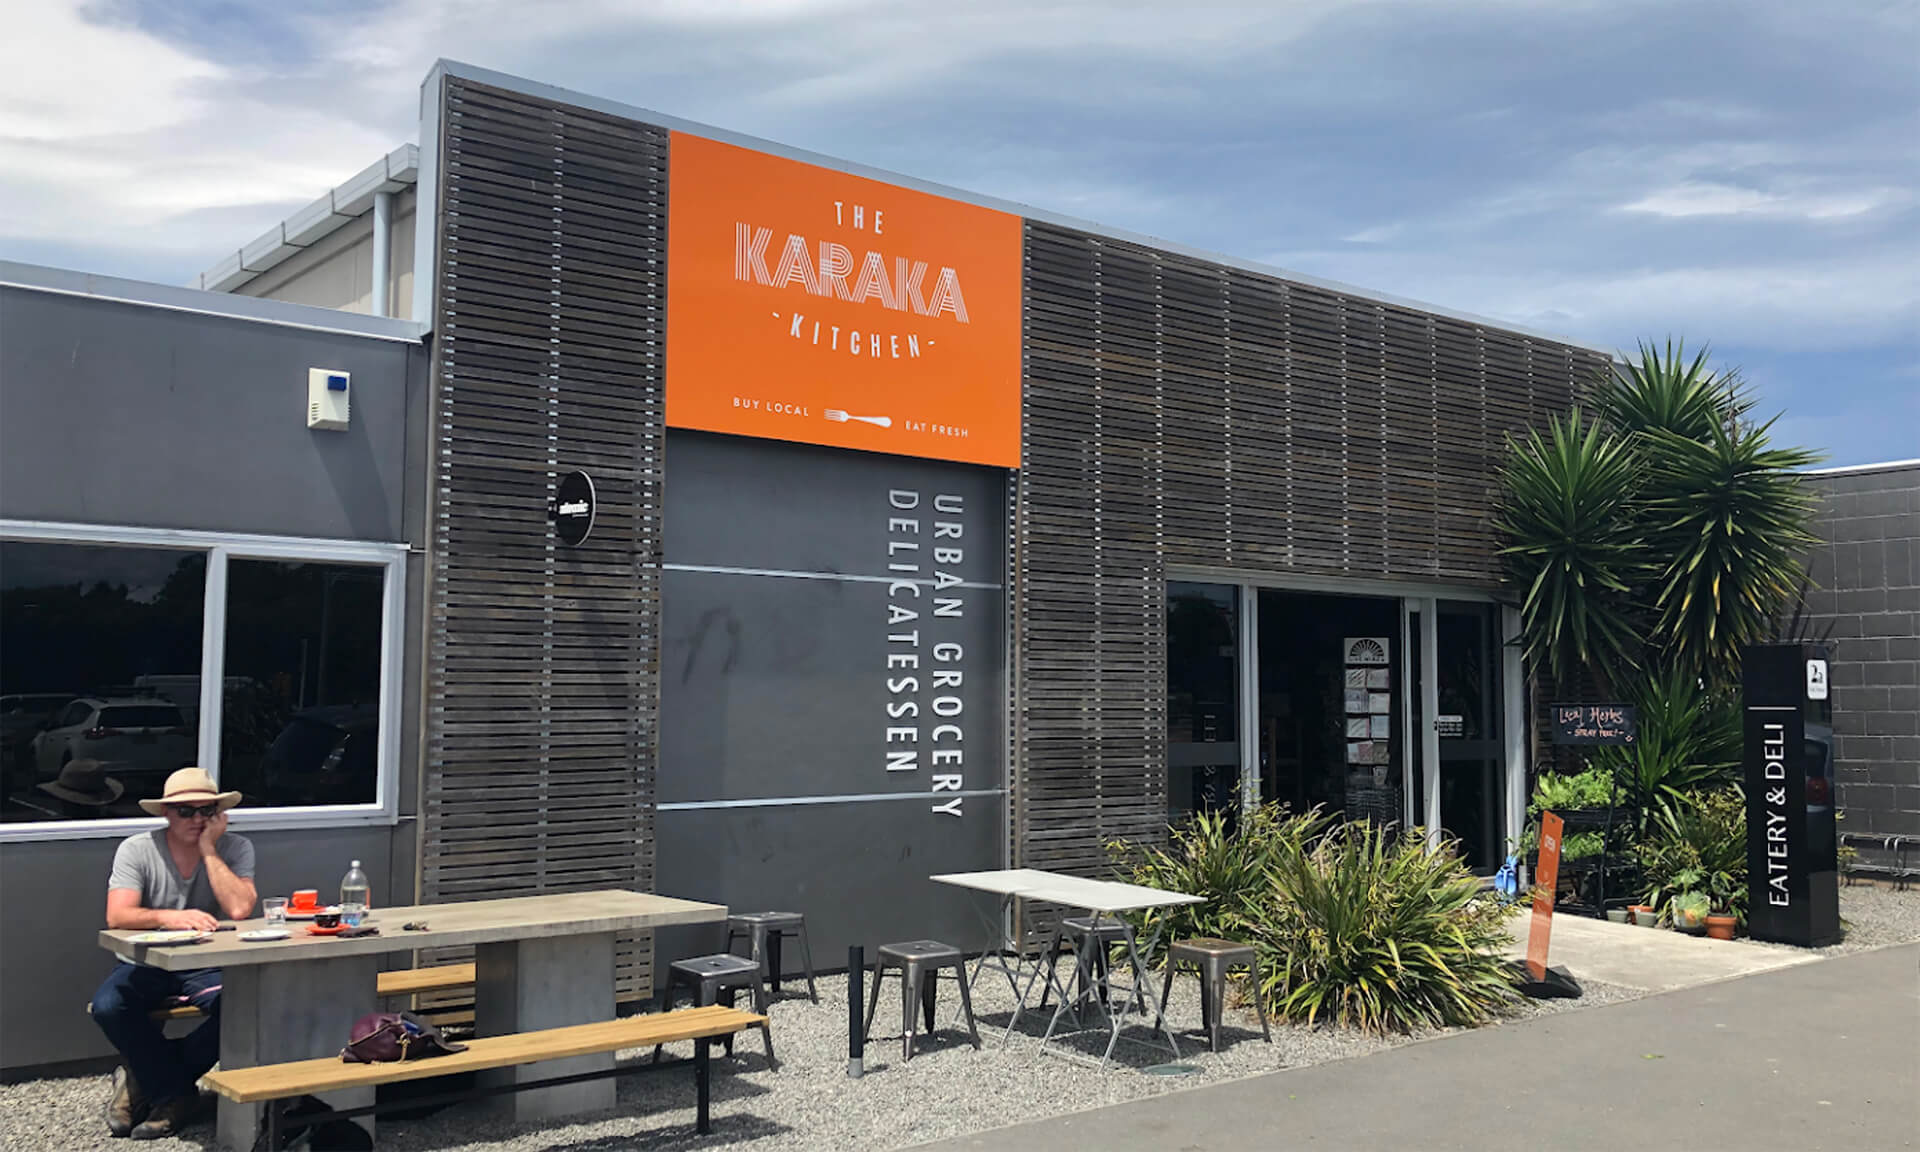 Karaka Cuisine Cafe in Blenheim, Marlborough NZ